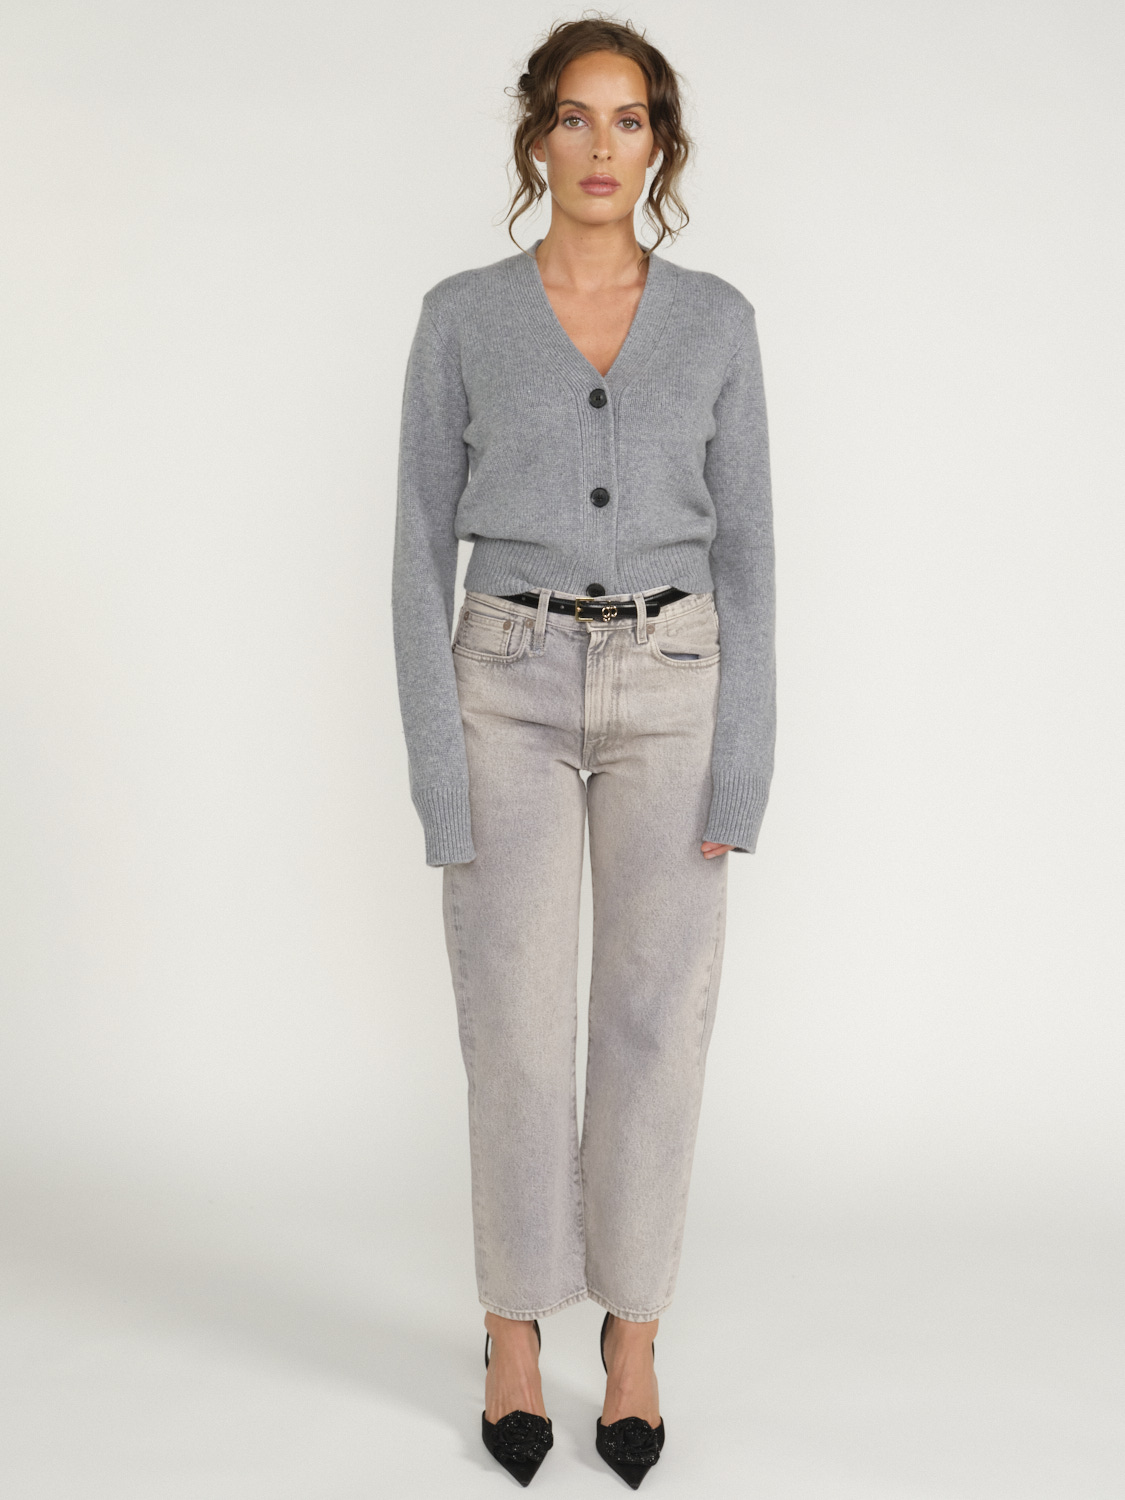 Nili Lotan Caldorf Sweater - Cardigan with button facing in cashmere grey M